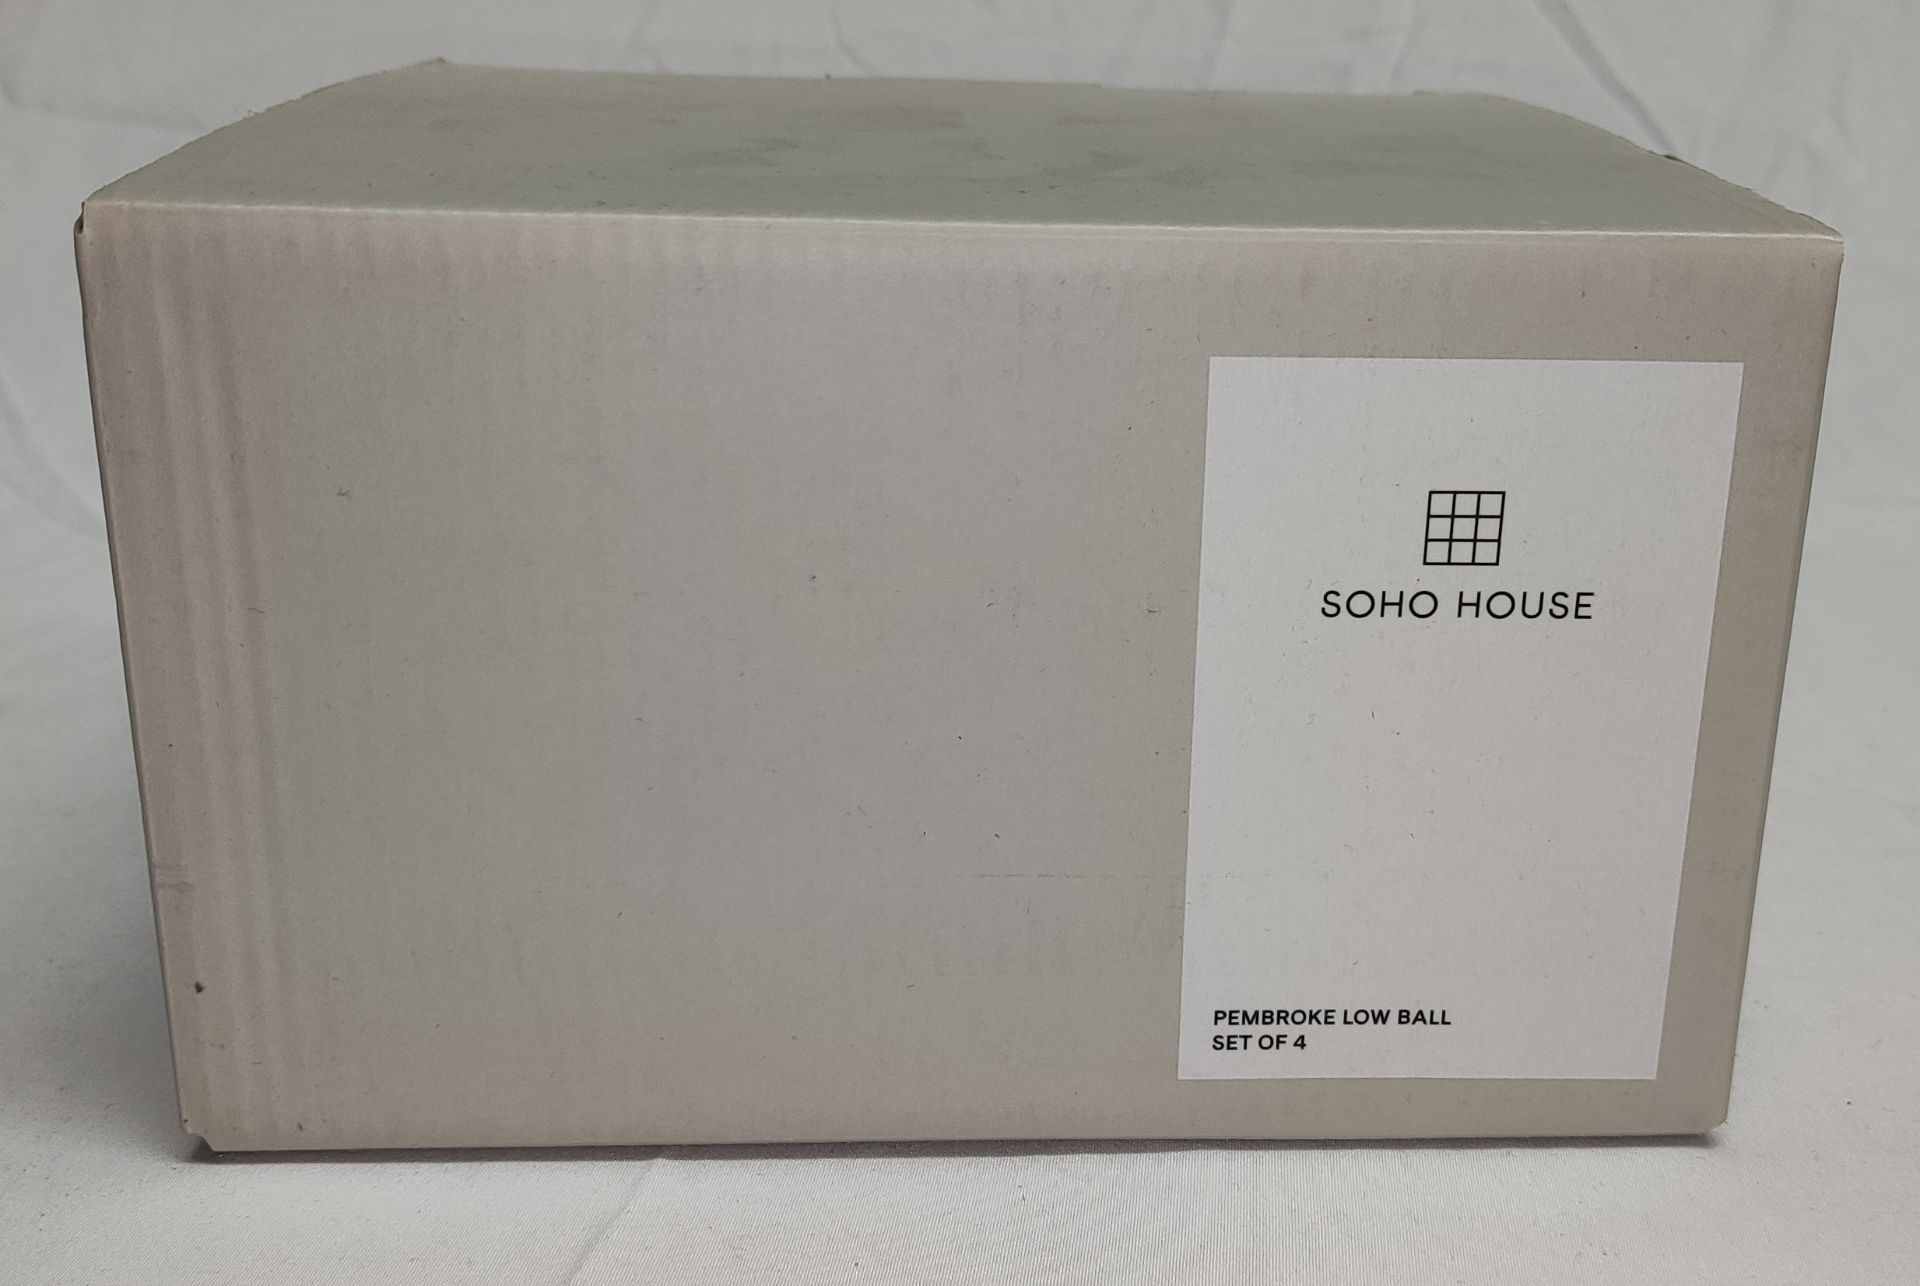 3 x SOHO HOME Pembroke Low Ball Glasses - New/Boxed - Original RRP £70 - Ref: 6909149/HJL368/C19/ - Image 5 of 11